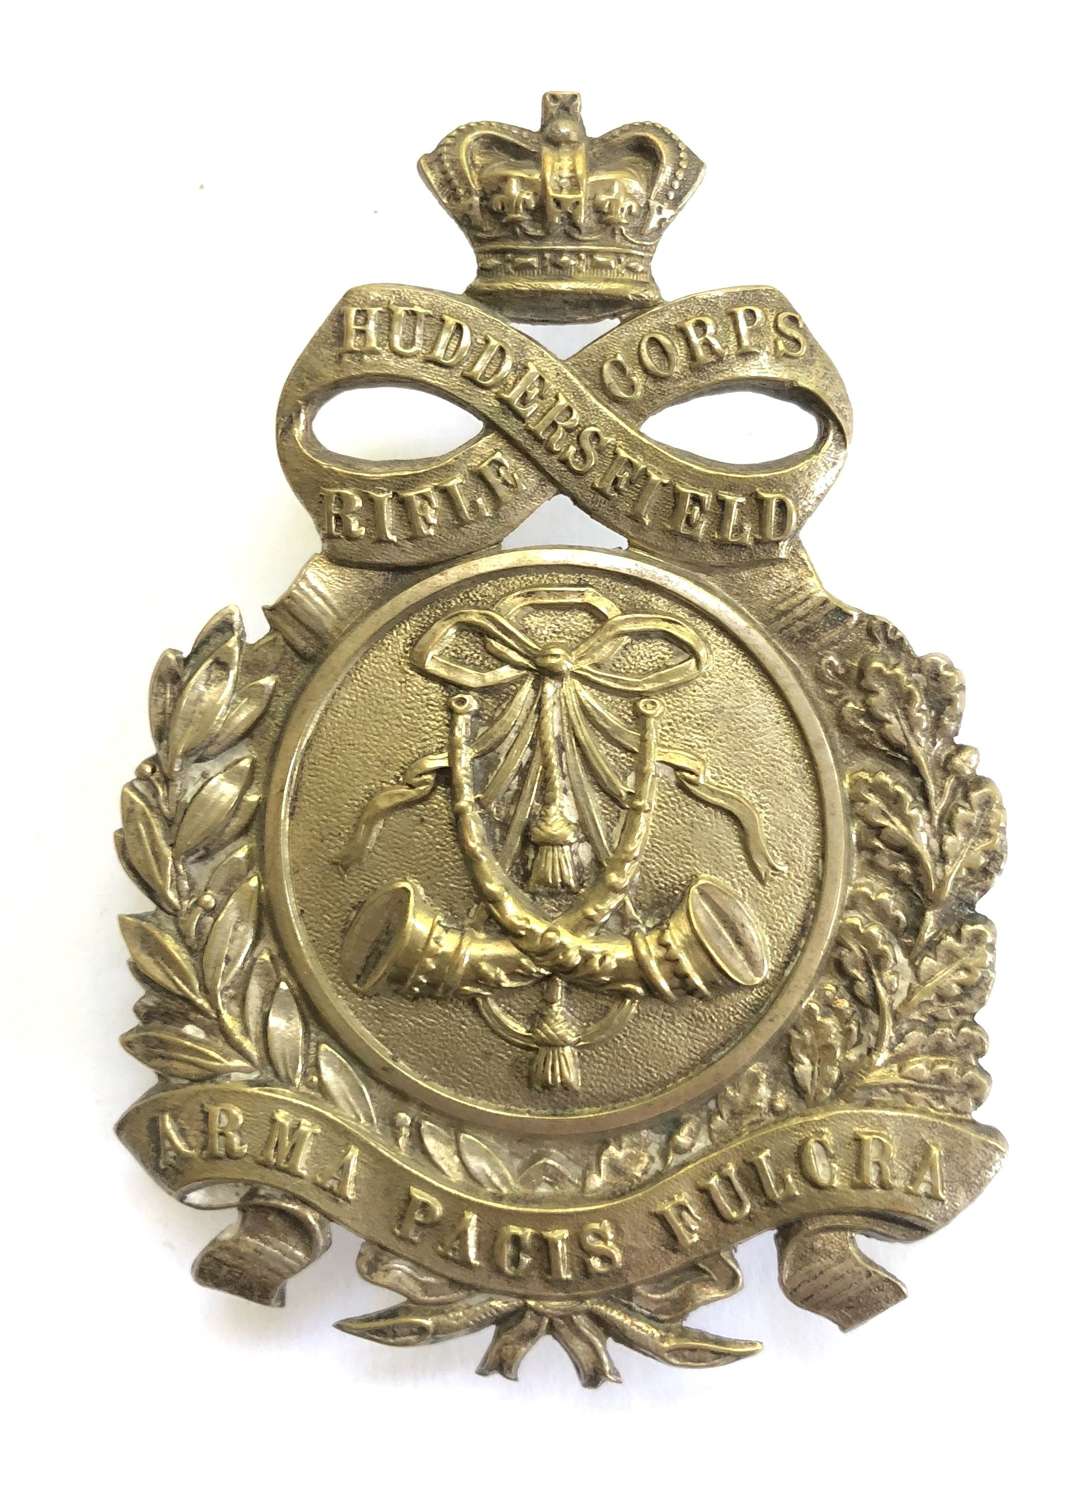 Huddersfield Rifle Corps Victorian Officer’s pouch belt plate